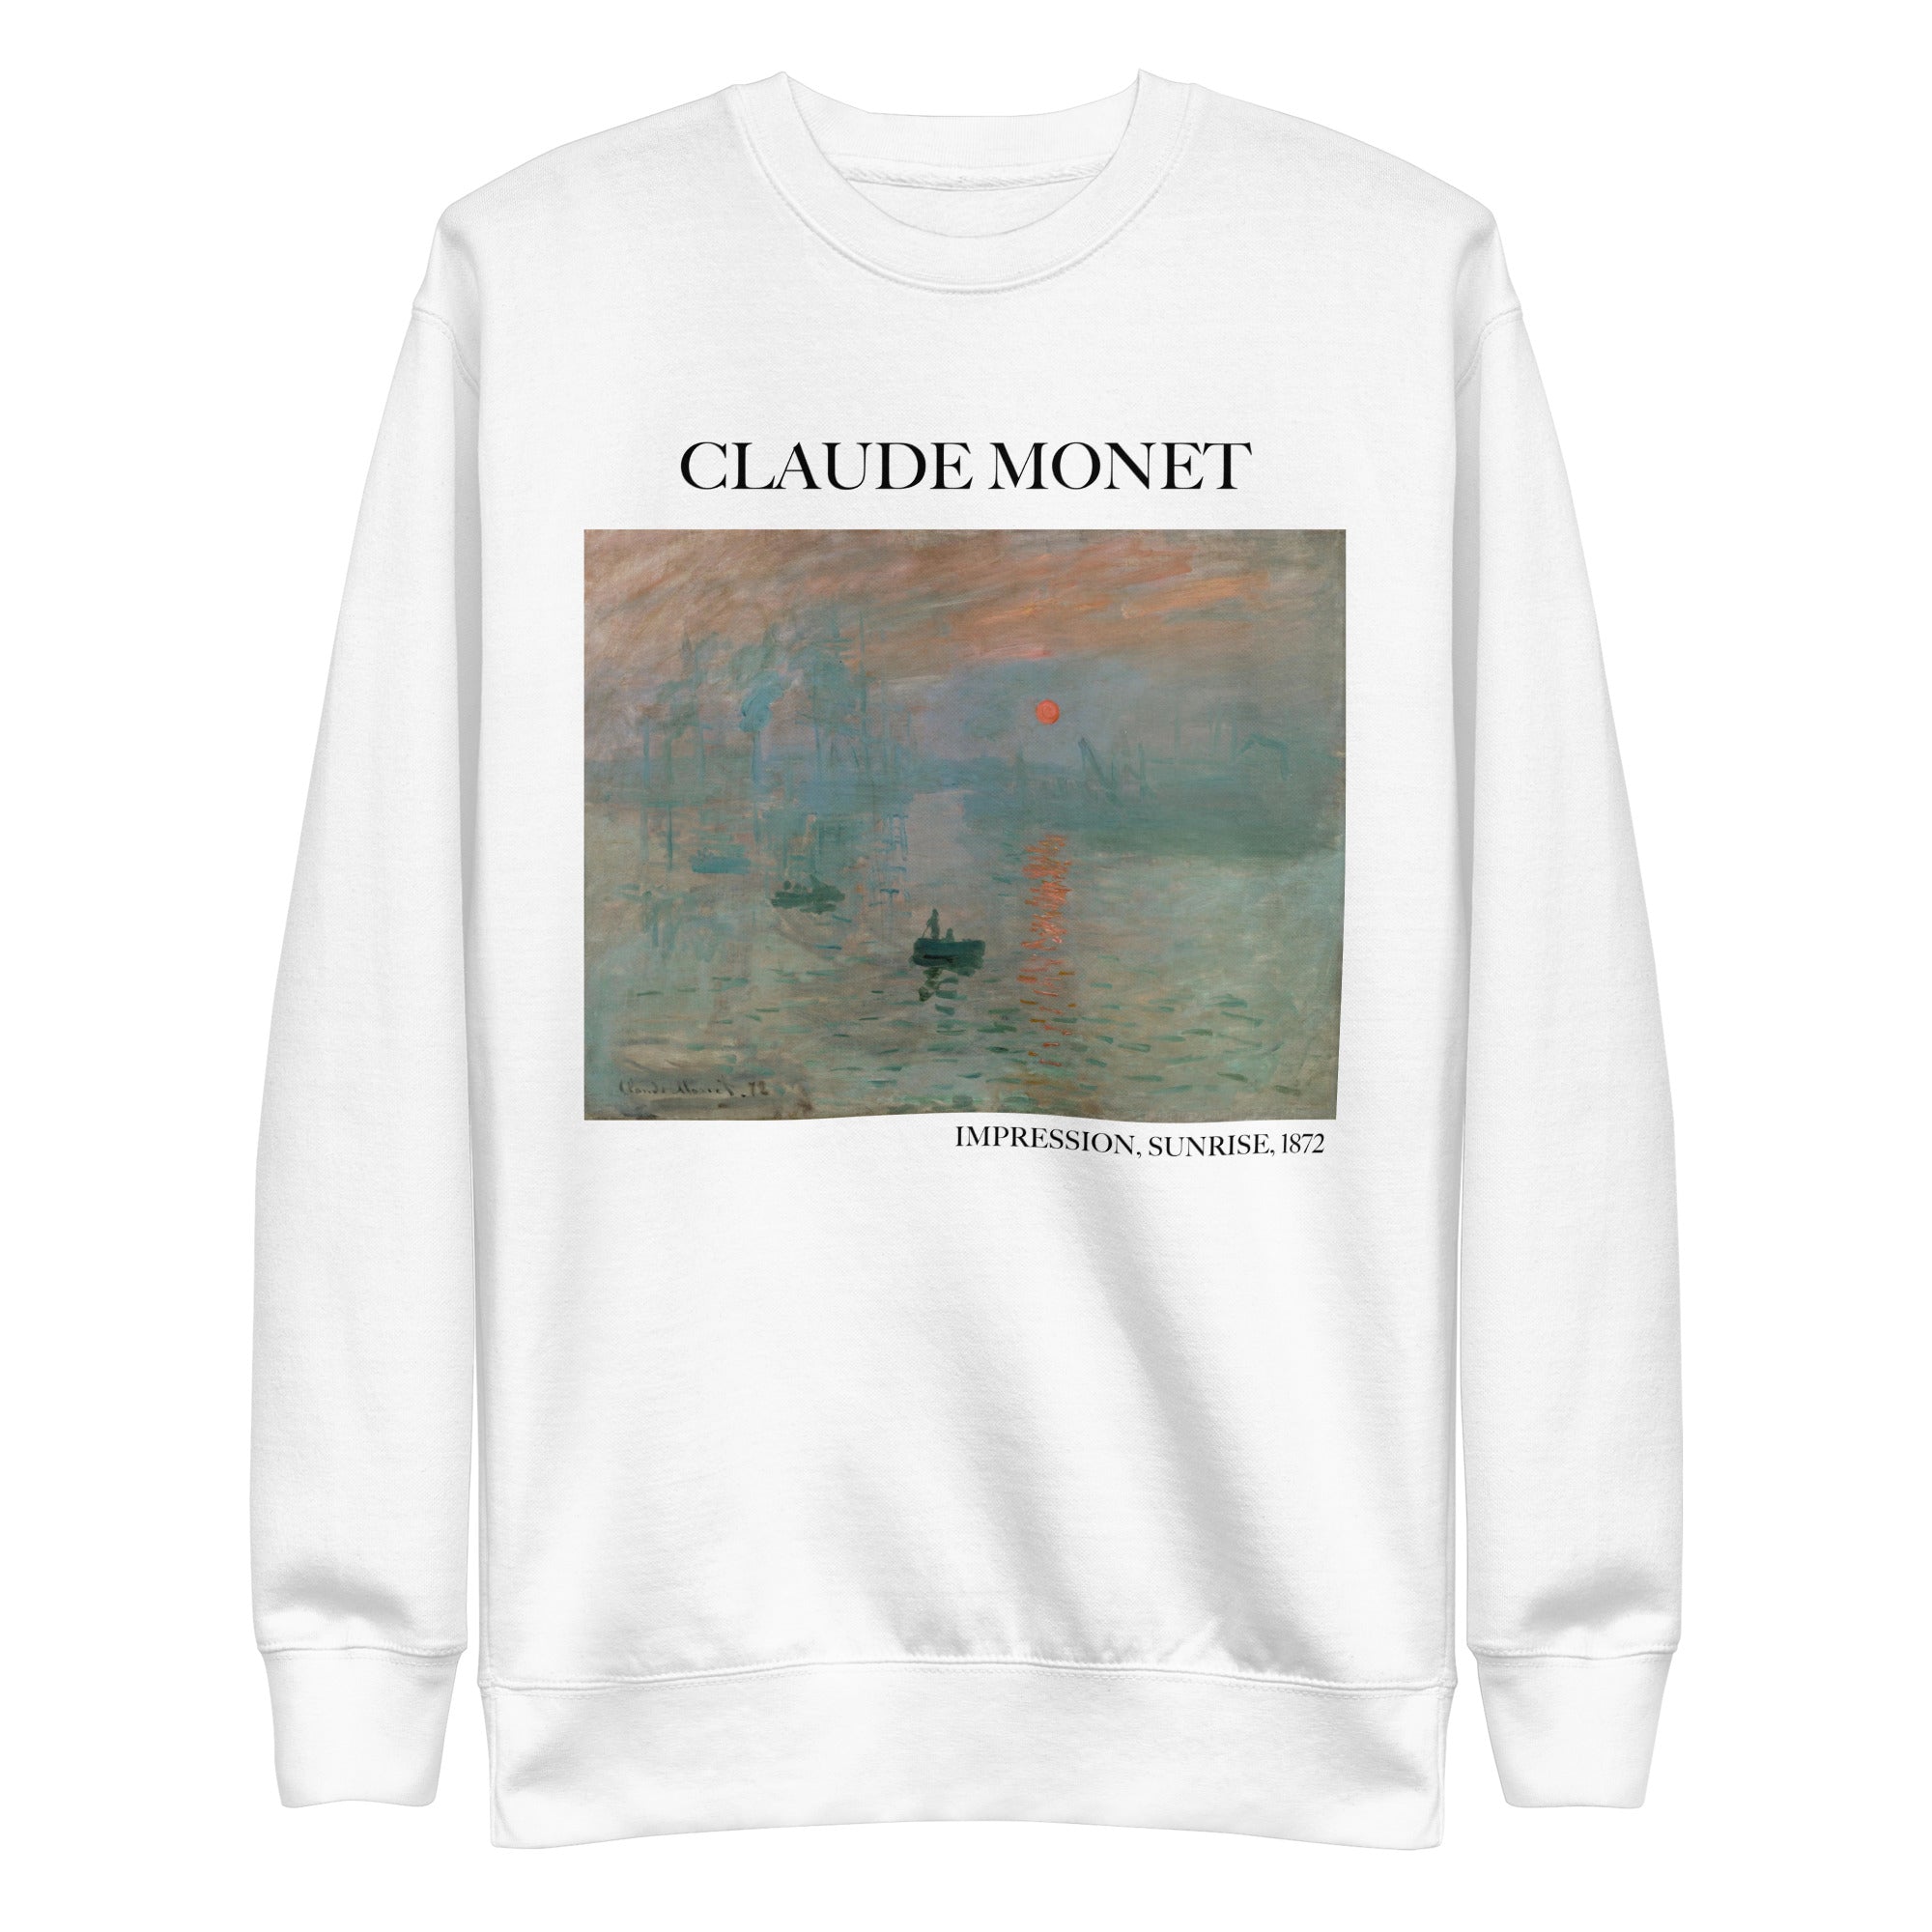 Claude Monet 'Impression, Sunrise' Famous Painting Sweatshirt | Unisex Premium Sweatshirt